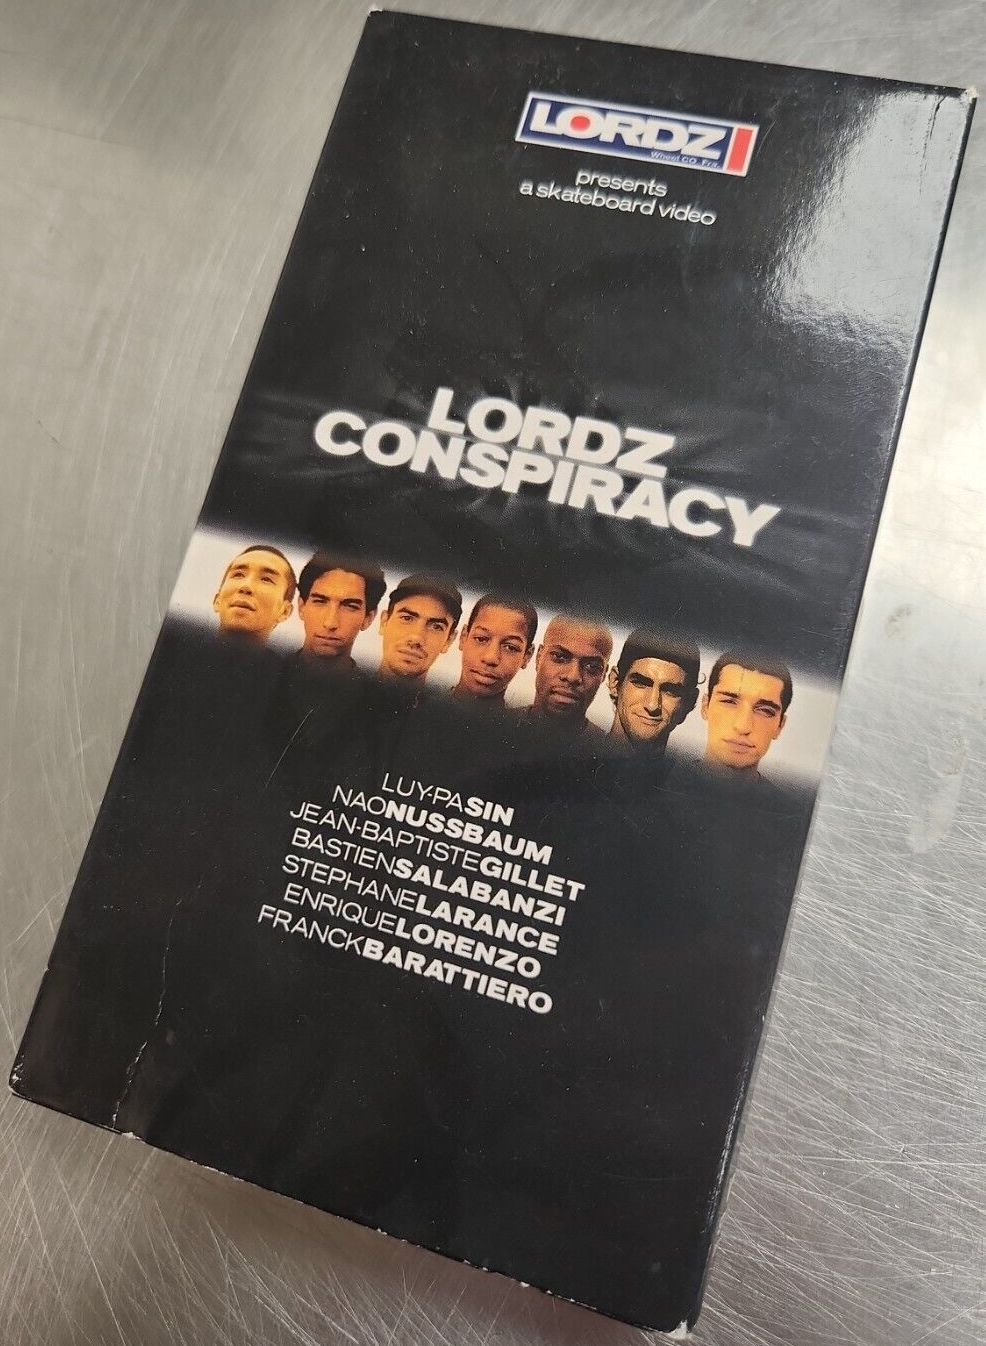 Lordz - Conspiracy cover art